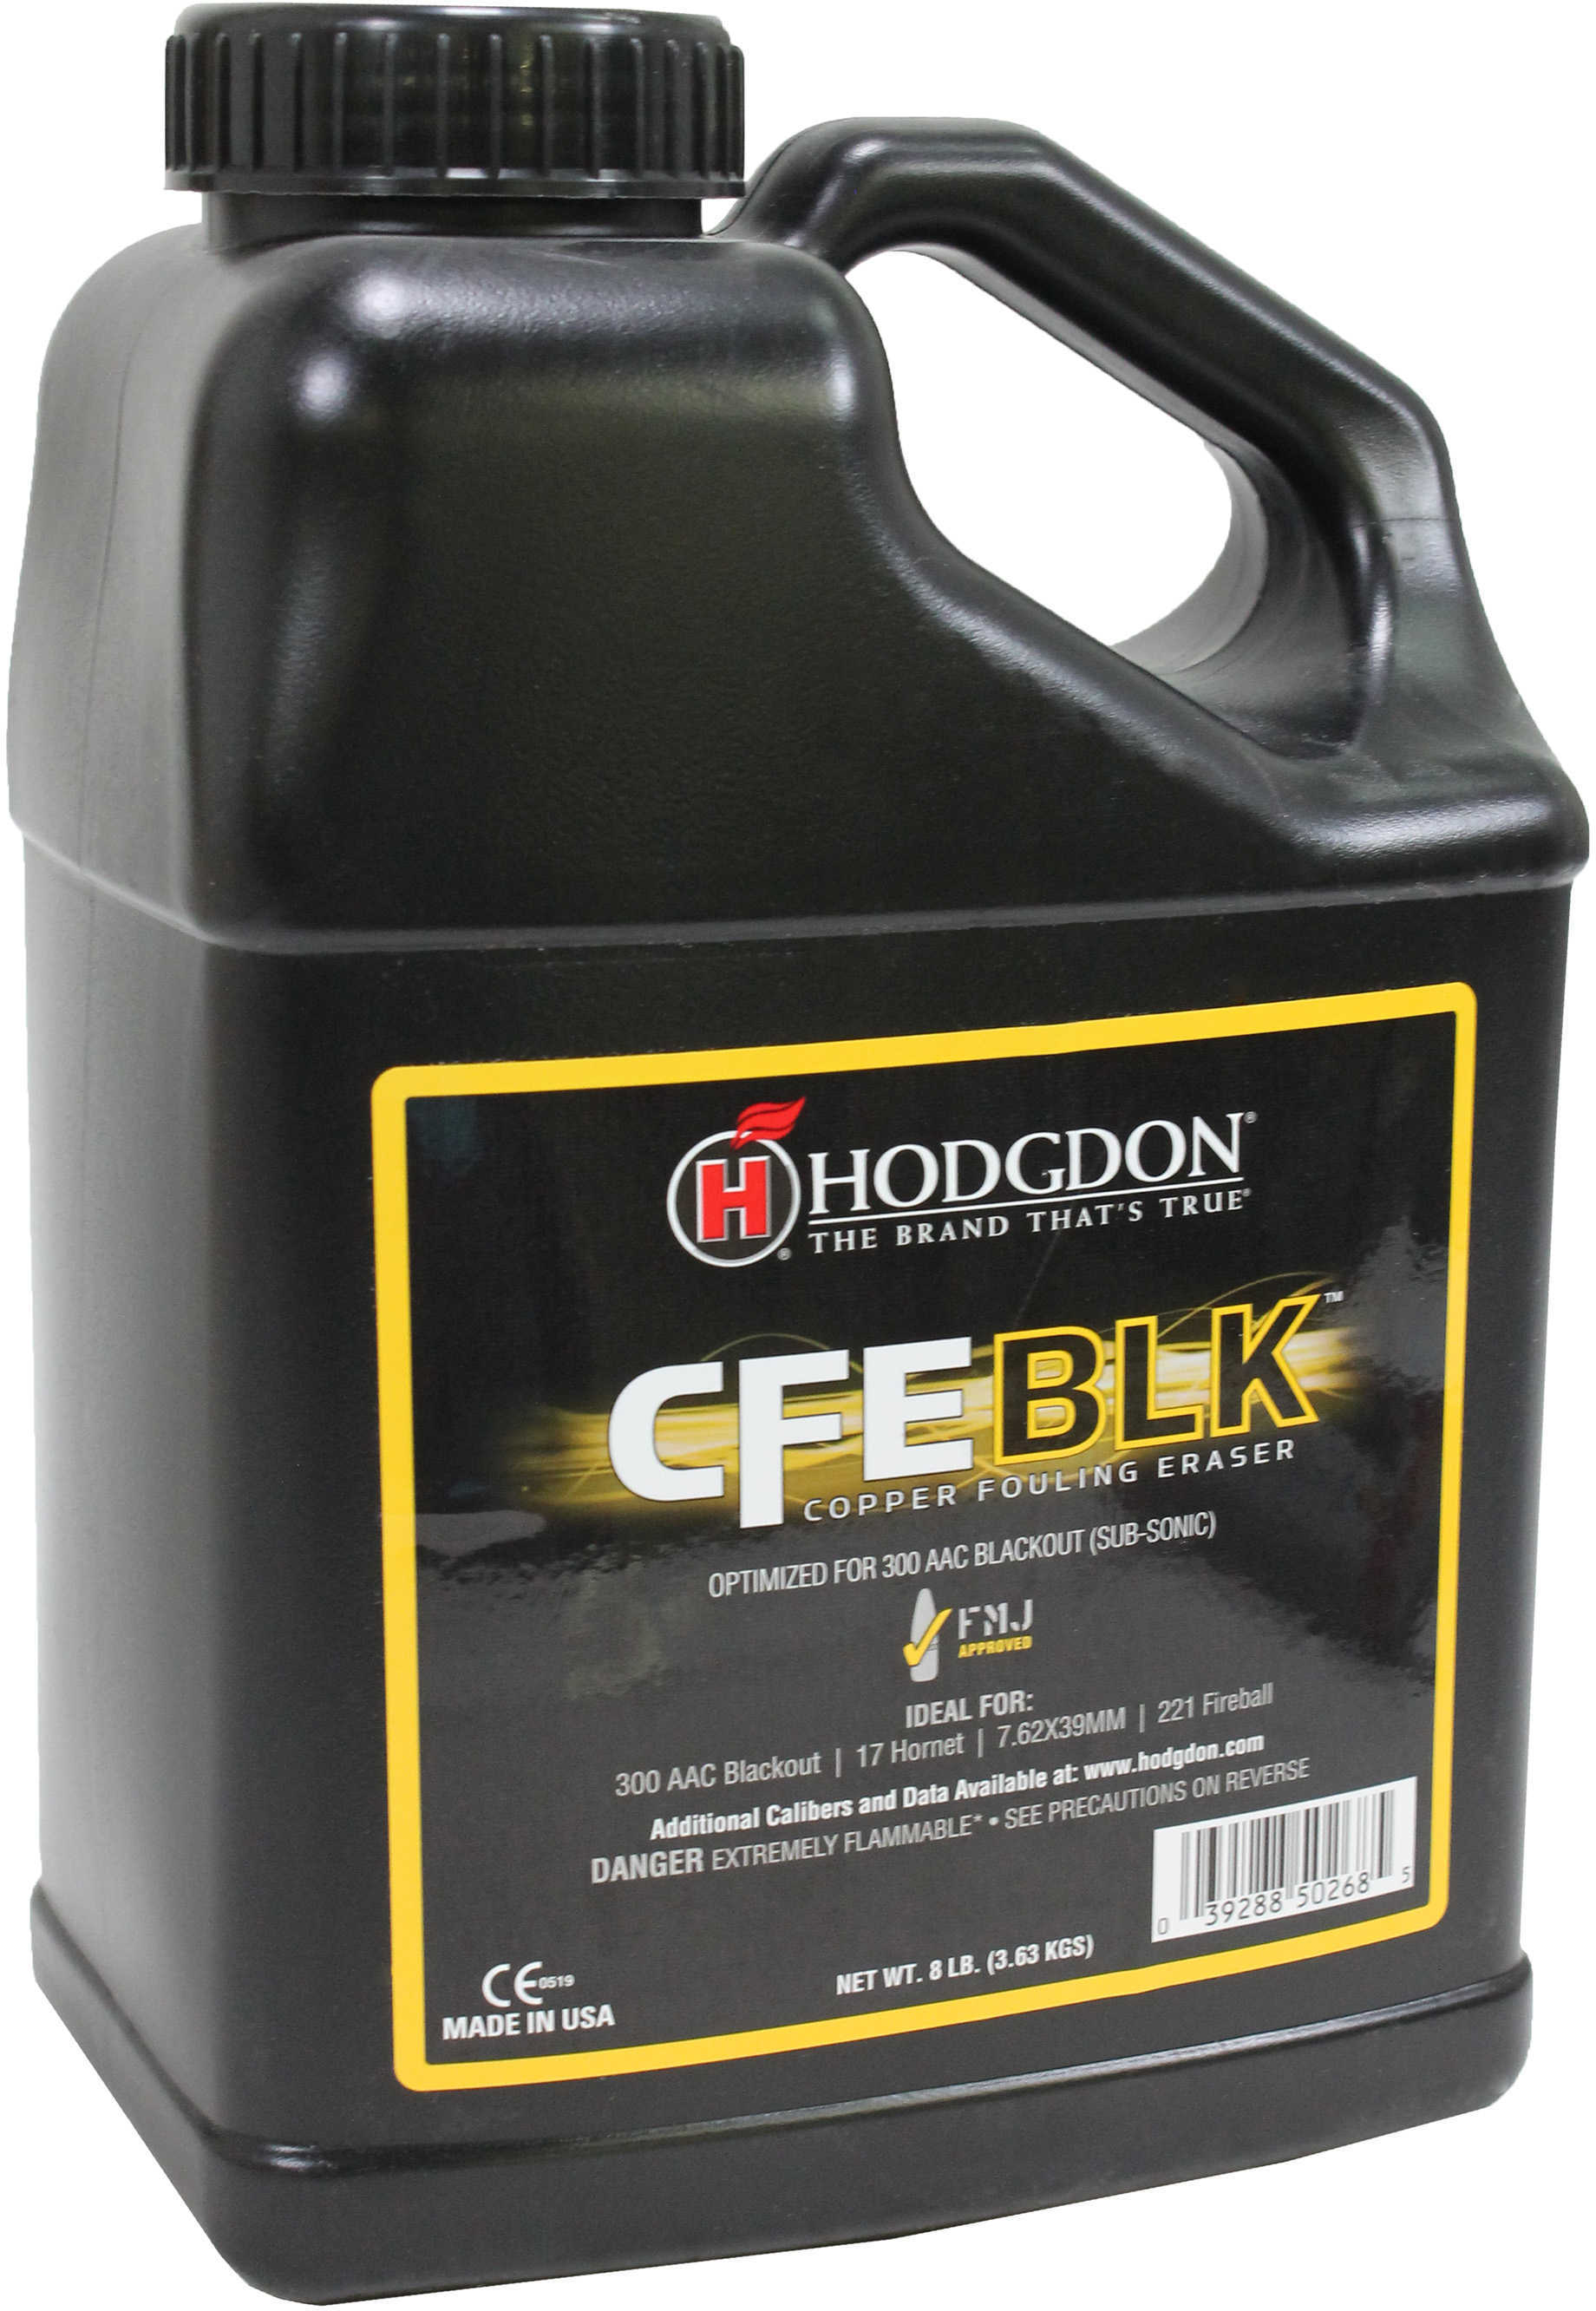 Black CFE Arifle Powder, 8 lb Container Md: BLACK8